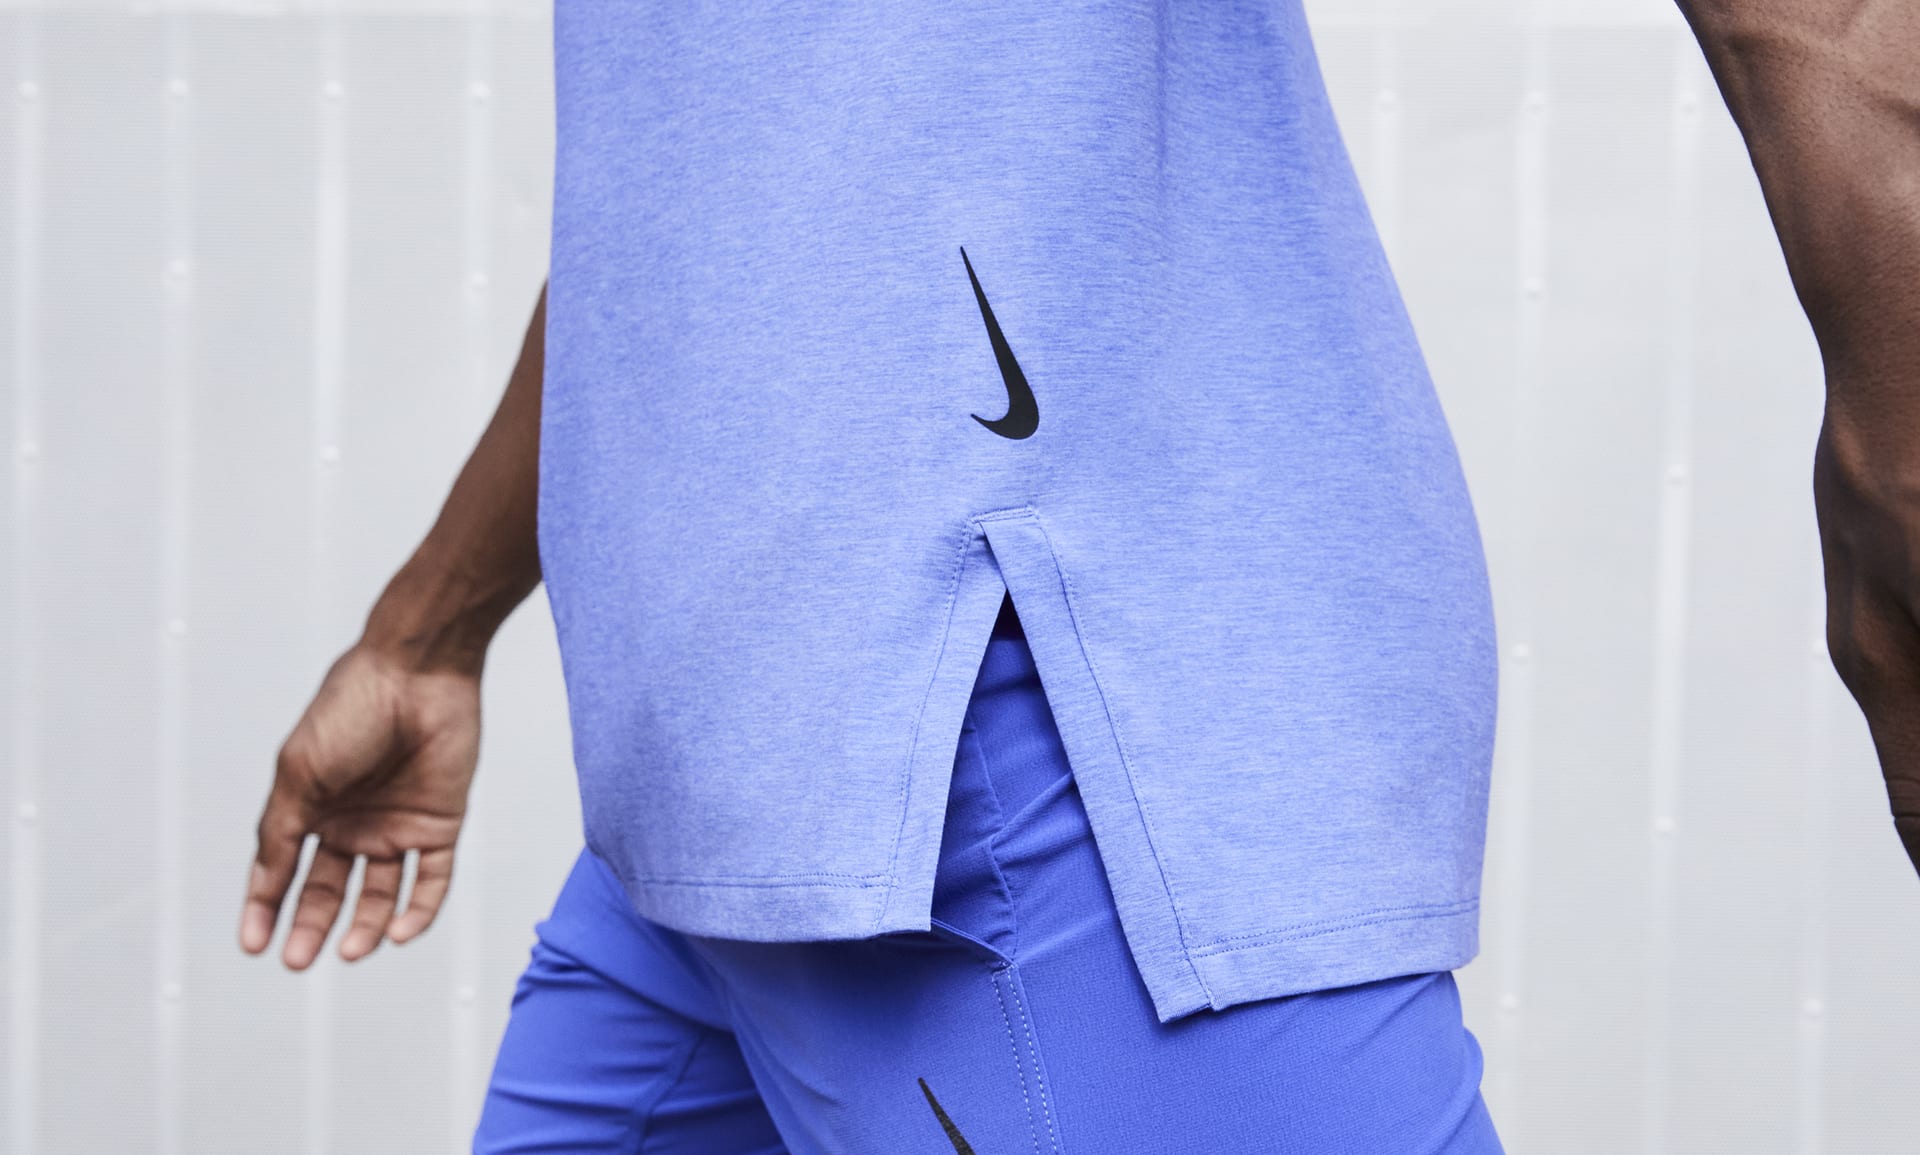 Nike Yoga Dri-FIT Men's Short-Sleeve Top.